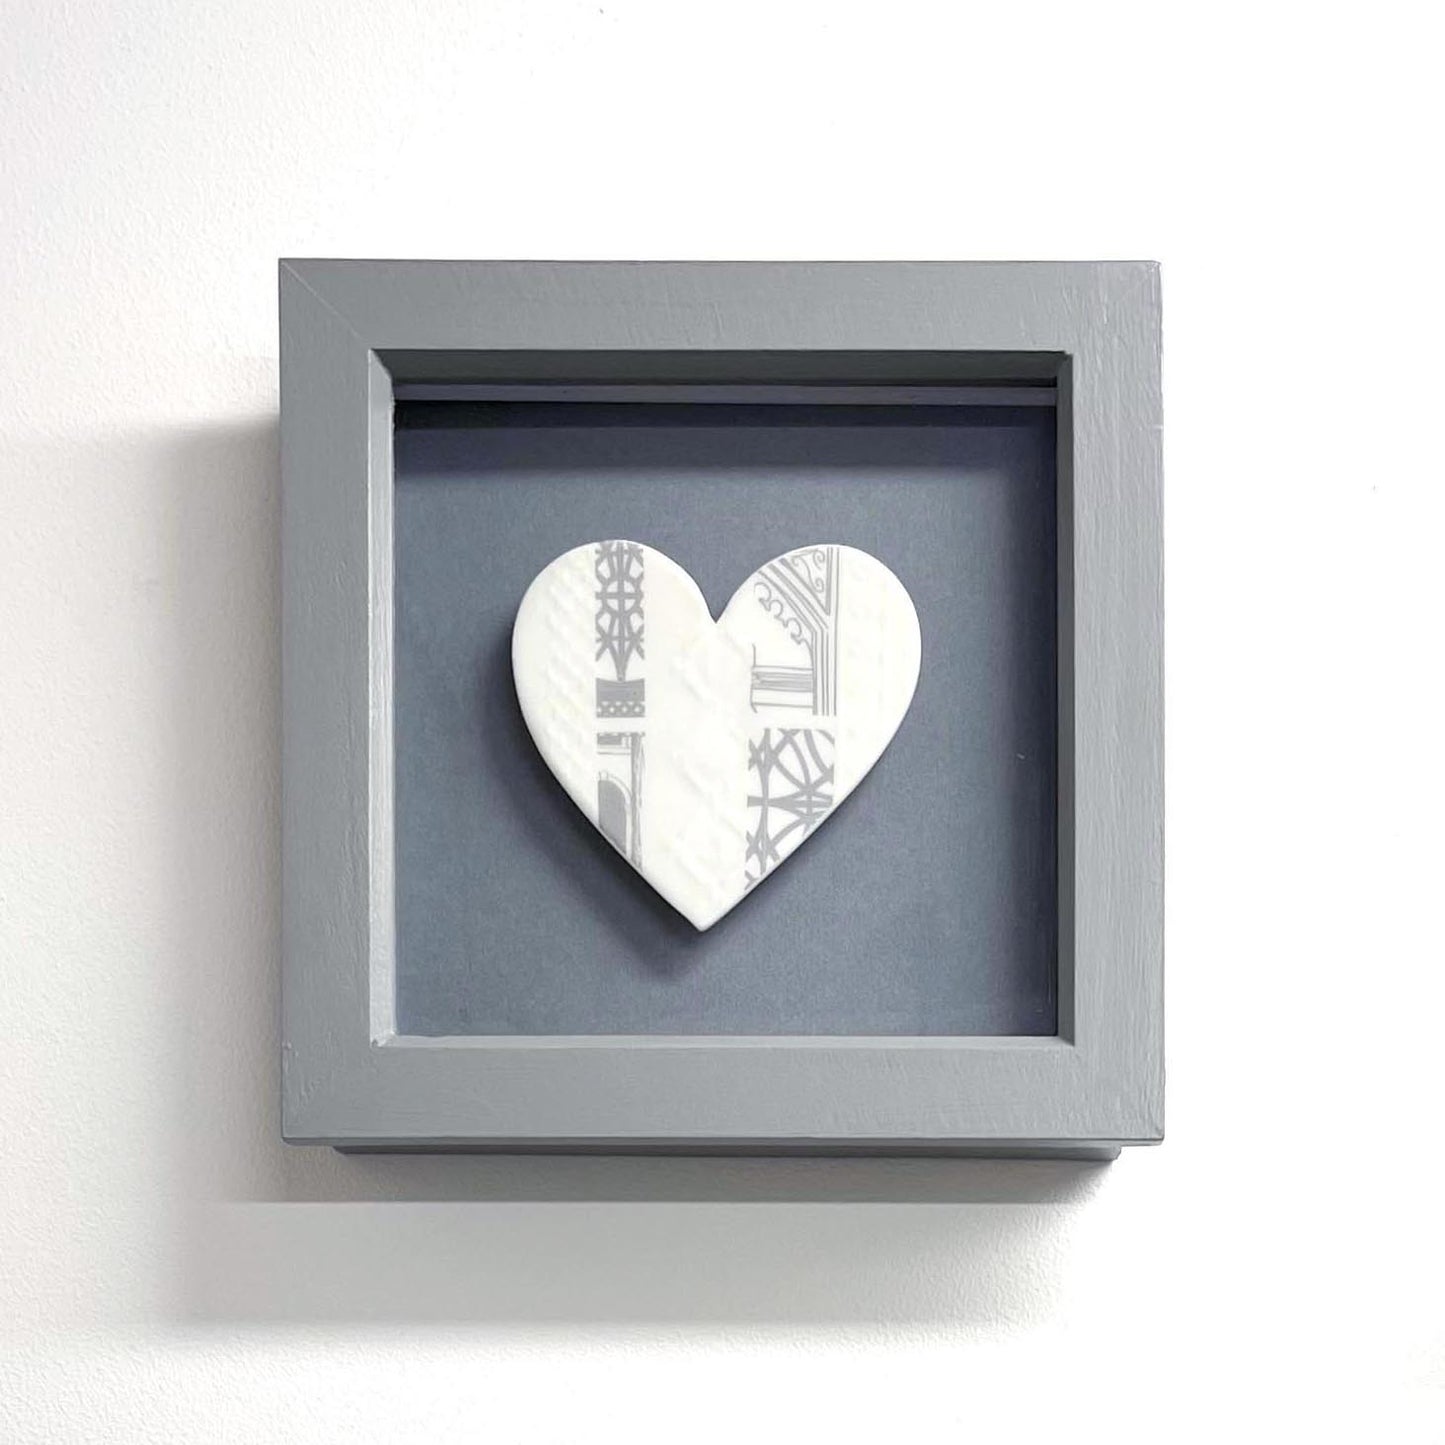 Framed Porcelain Heart - Architecture